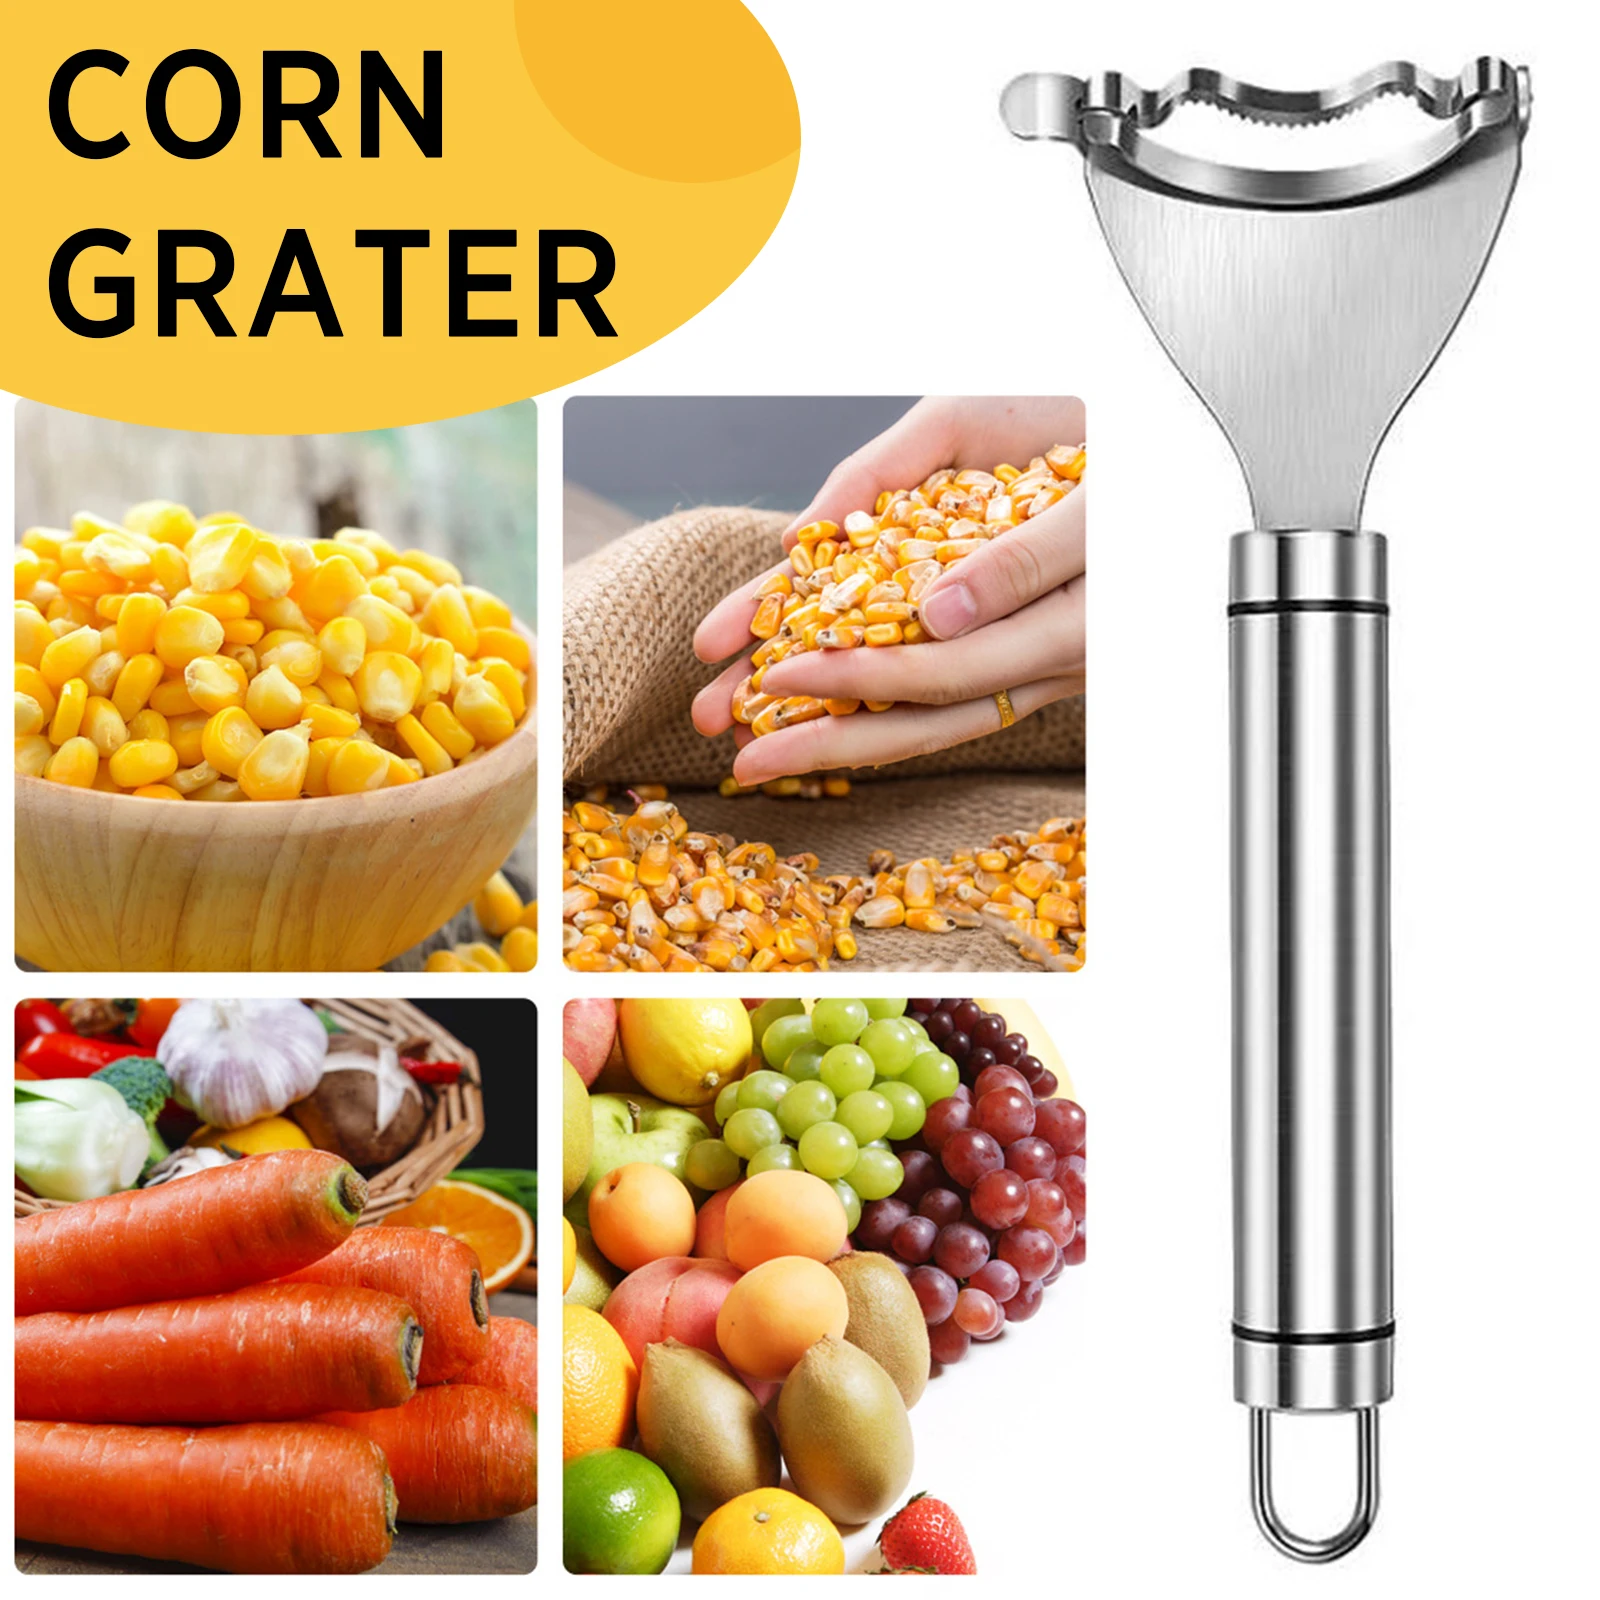 

New Stainless Steel Corn Stripper Corn Kernels Cob Peeler Threshing Kerneler Blade Metal Kitchen Corn Cutter Tools Gadgets